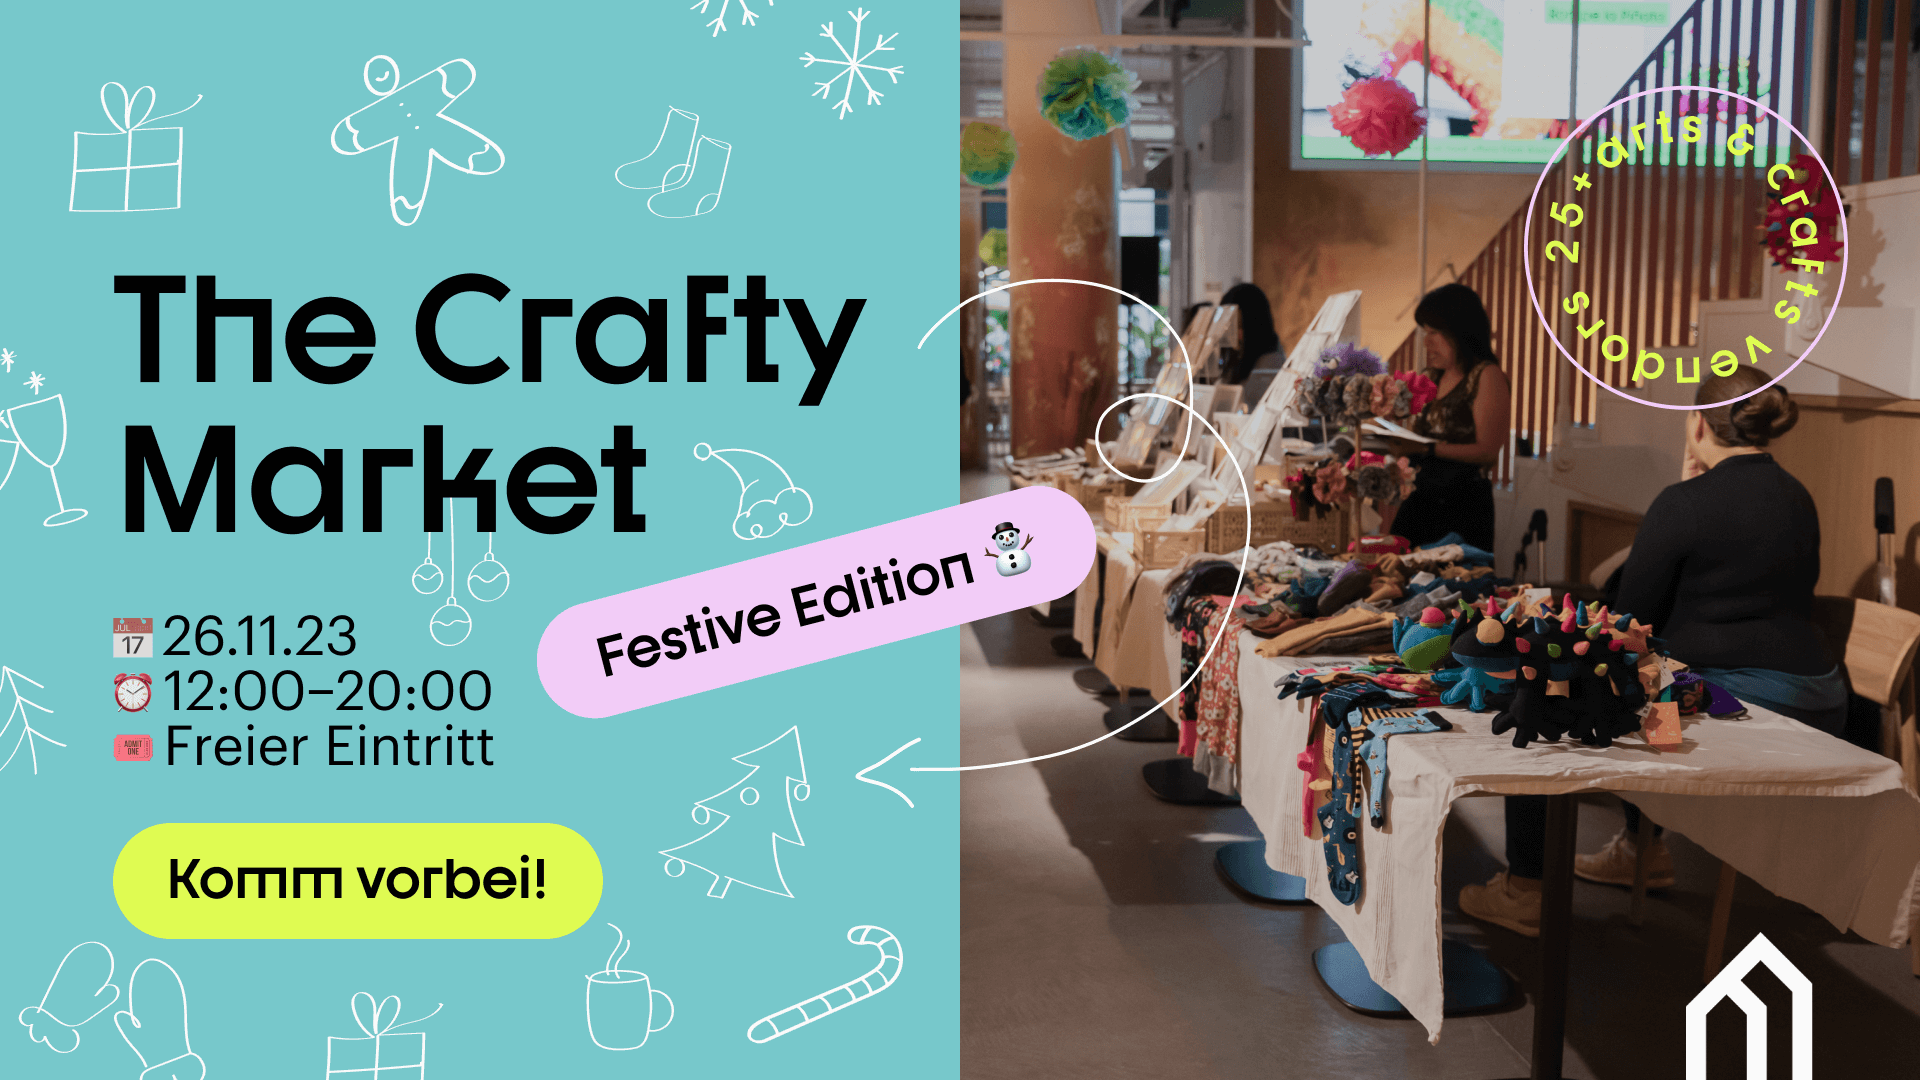 The Crafty Market ⎮ Festive Edition 